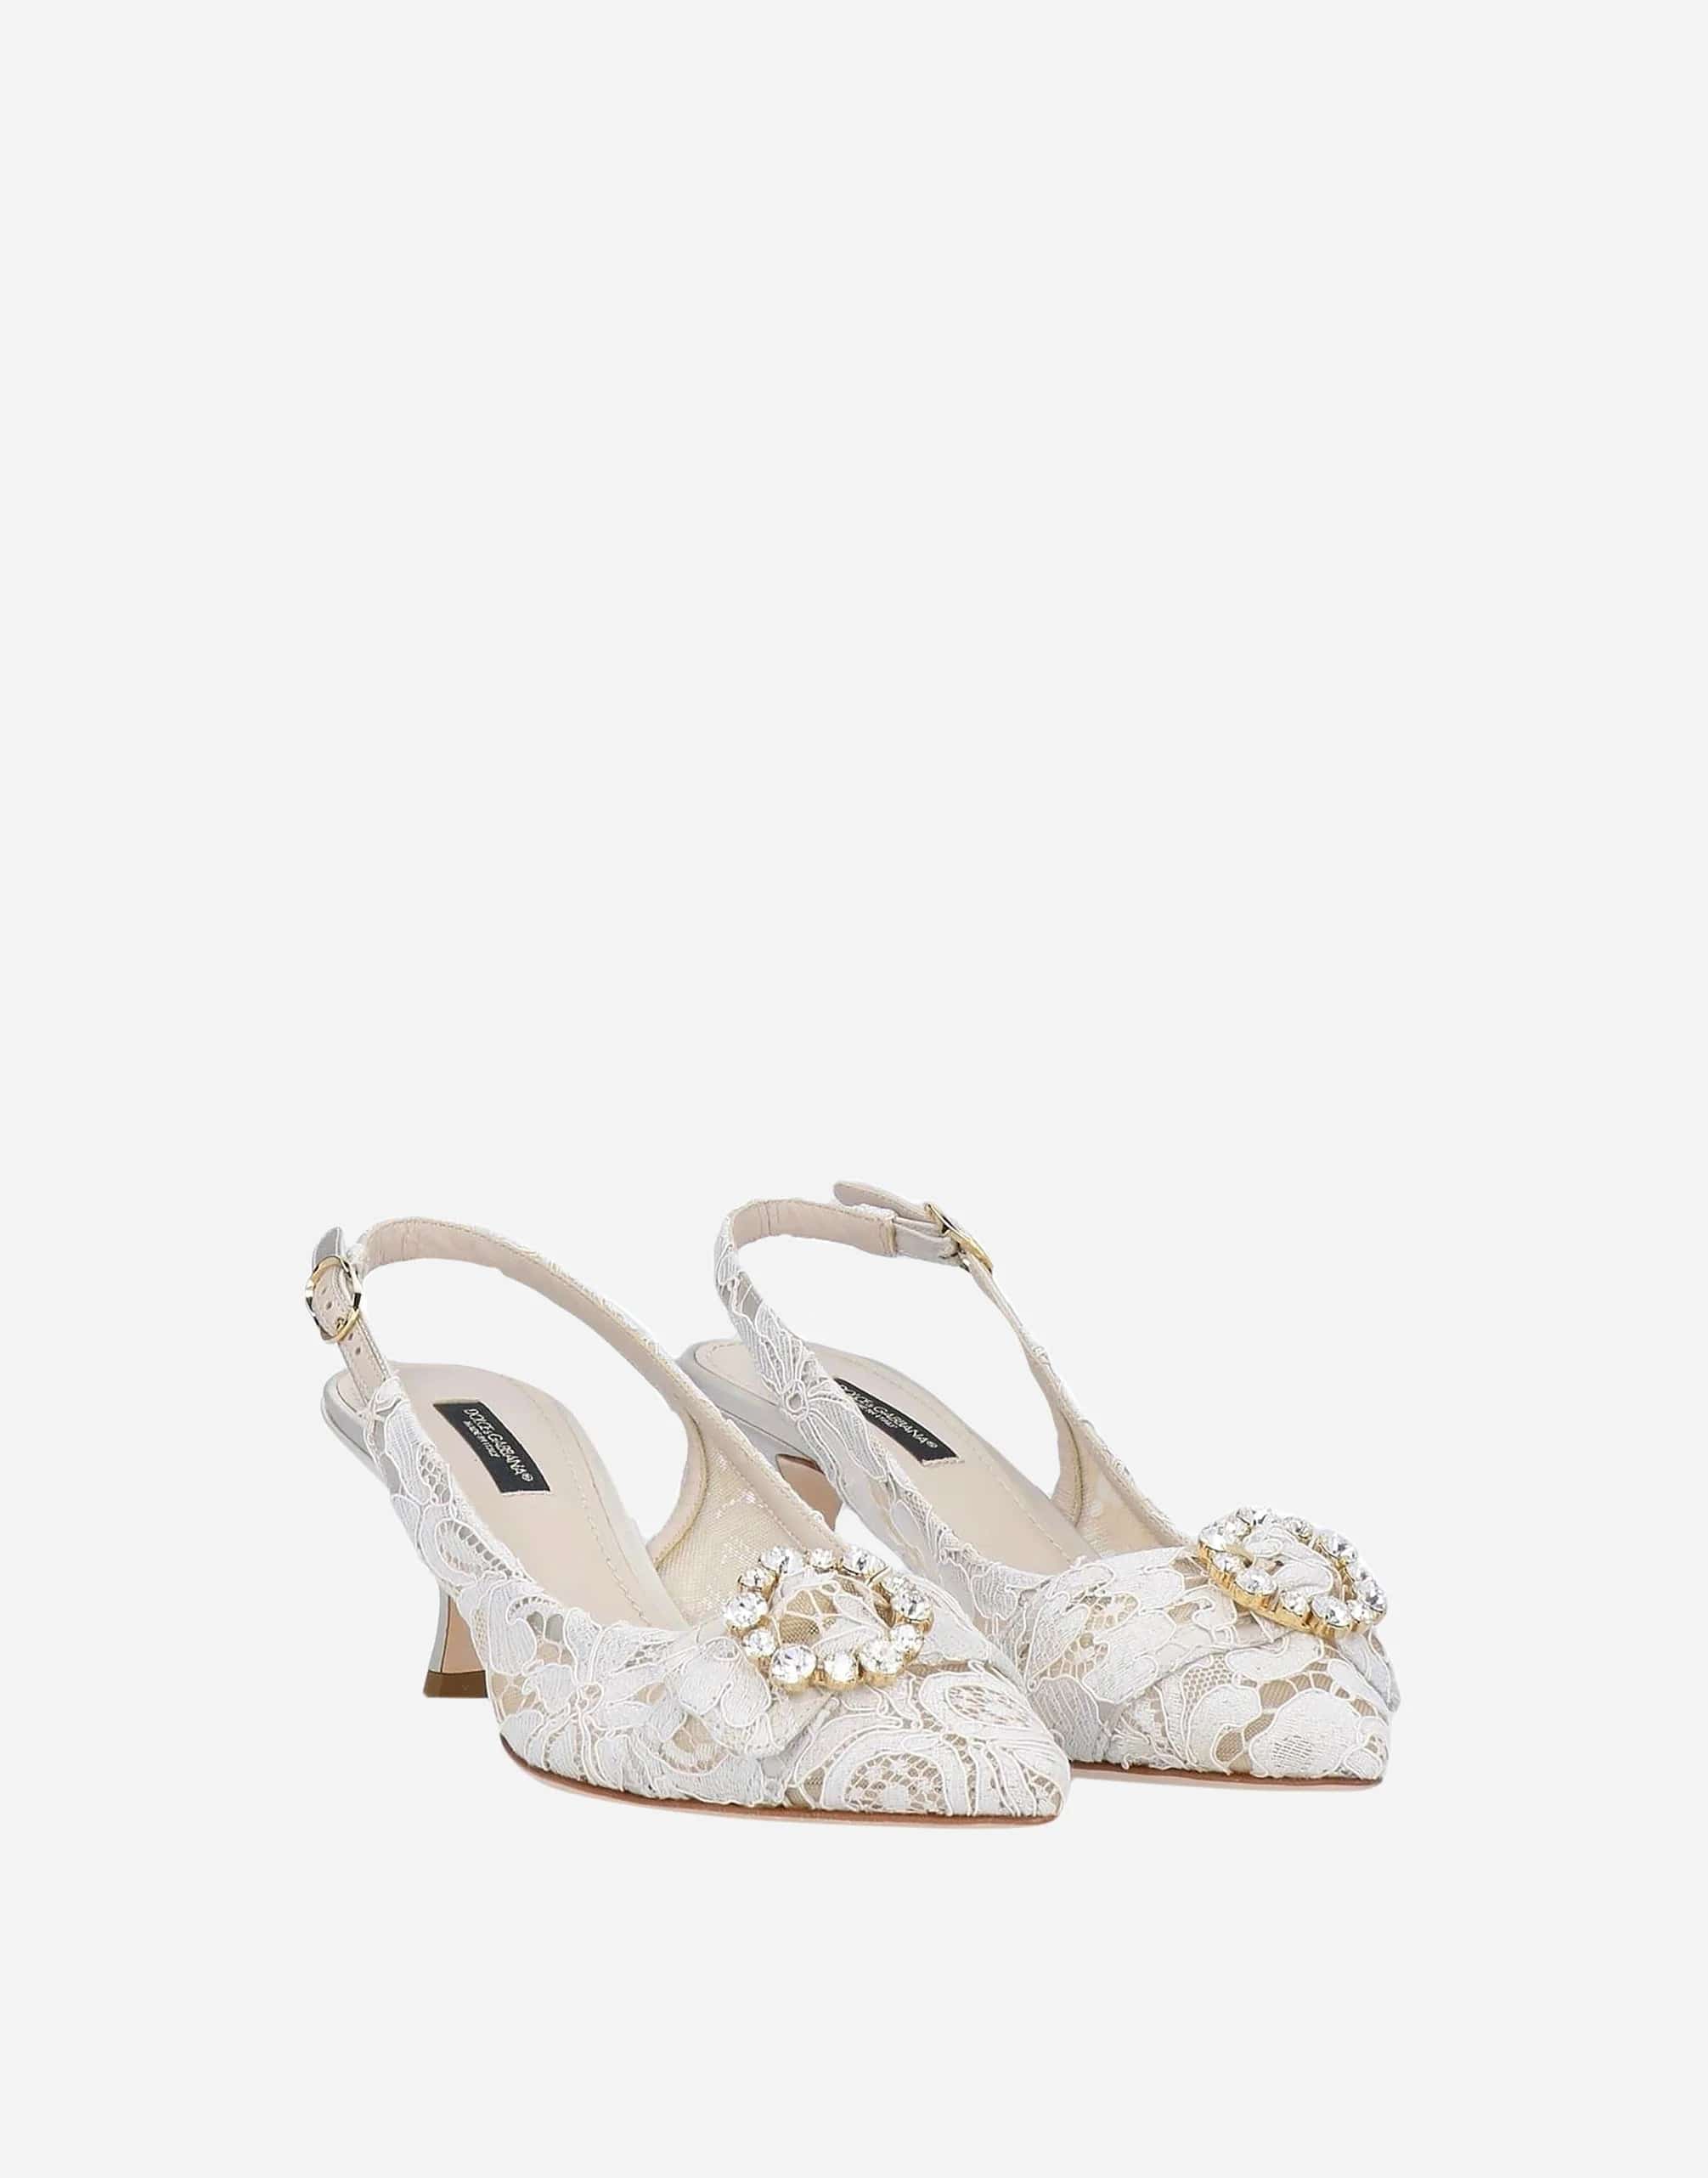 Dolce & Gabbana Taormina Lace Crystal Embellished Slingback Sandals